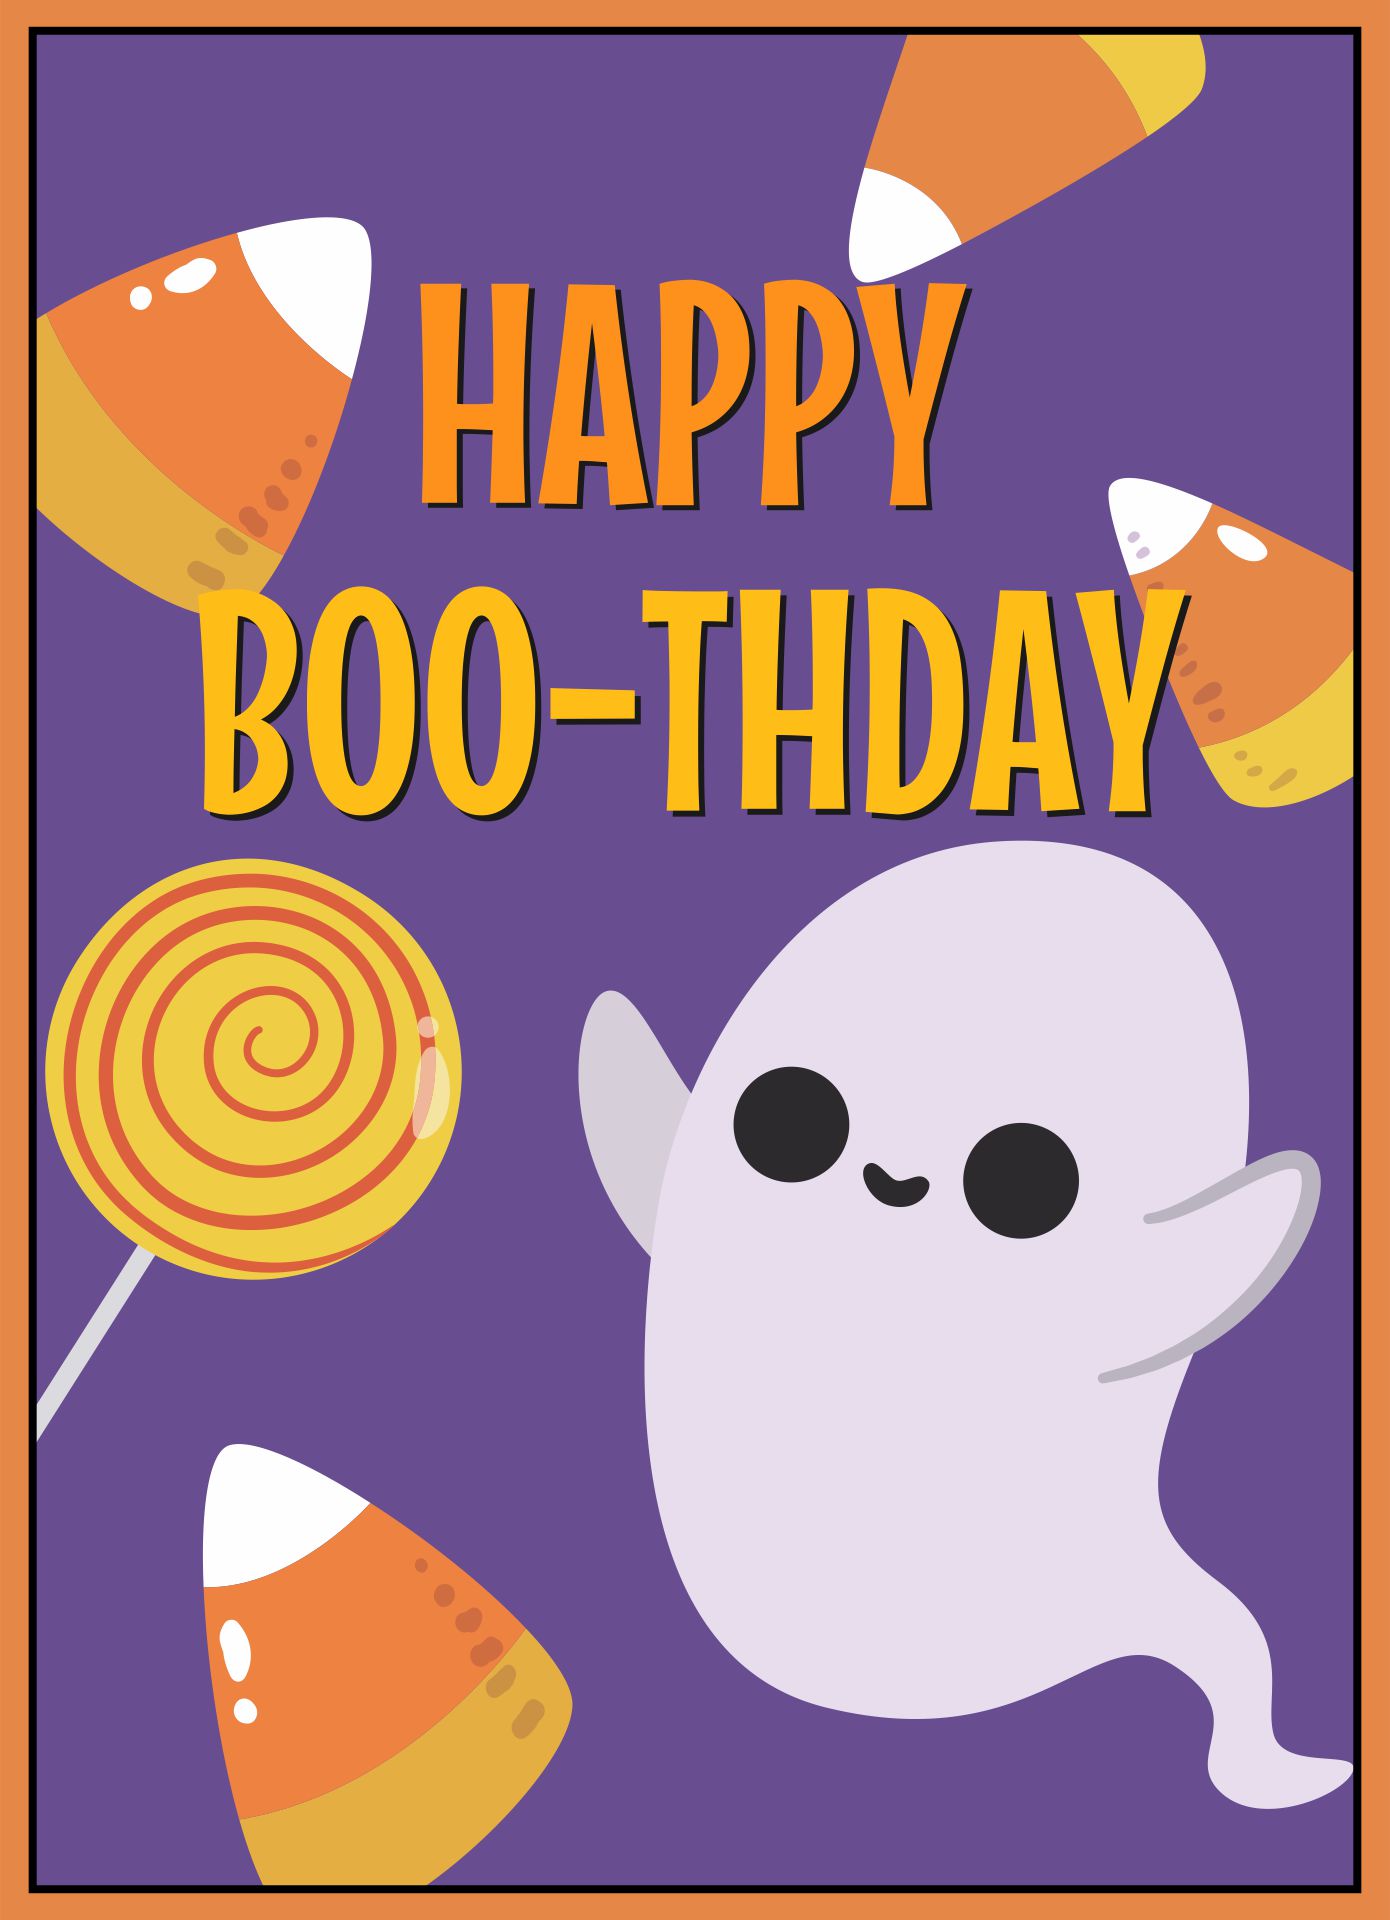 Halloween Birthday Cards Free Printable